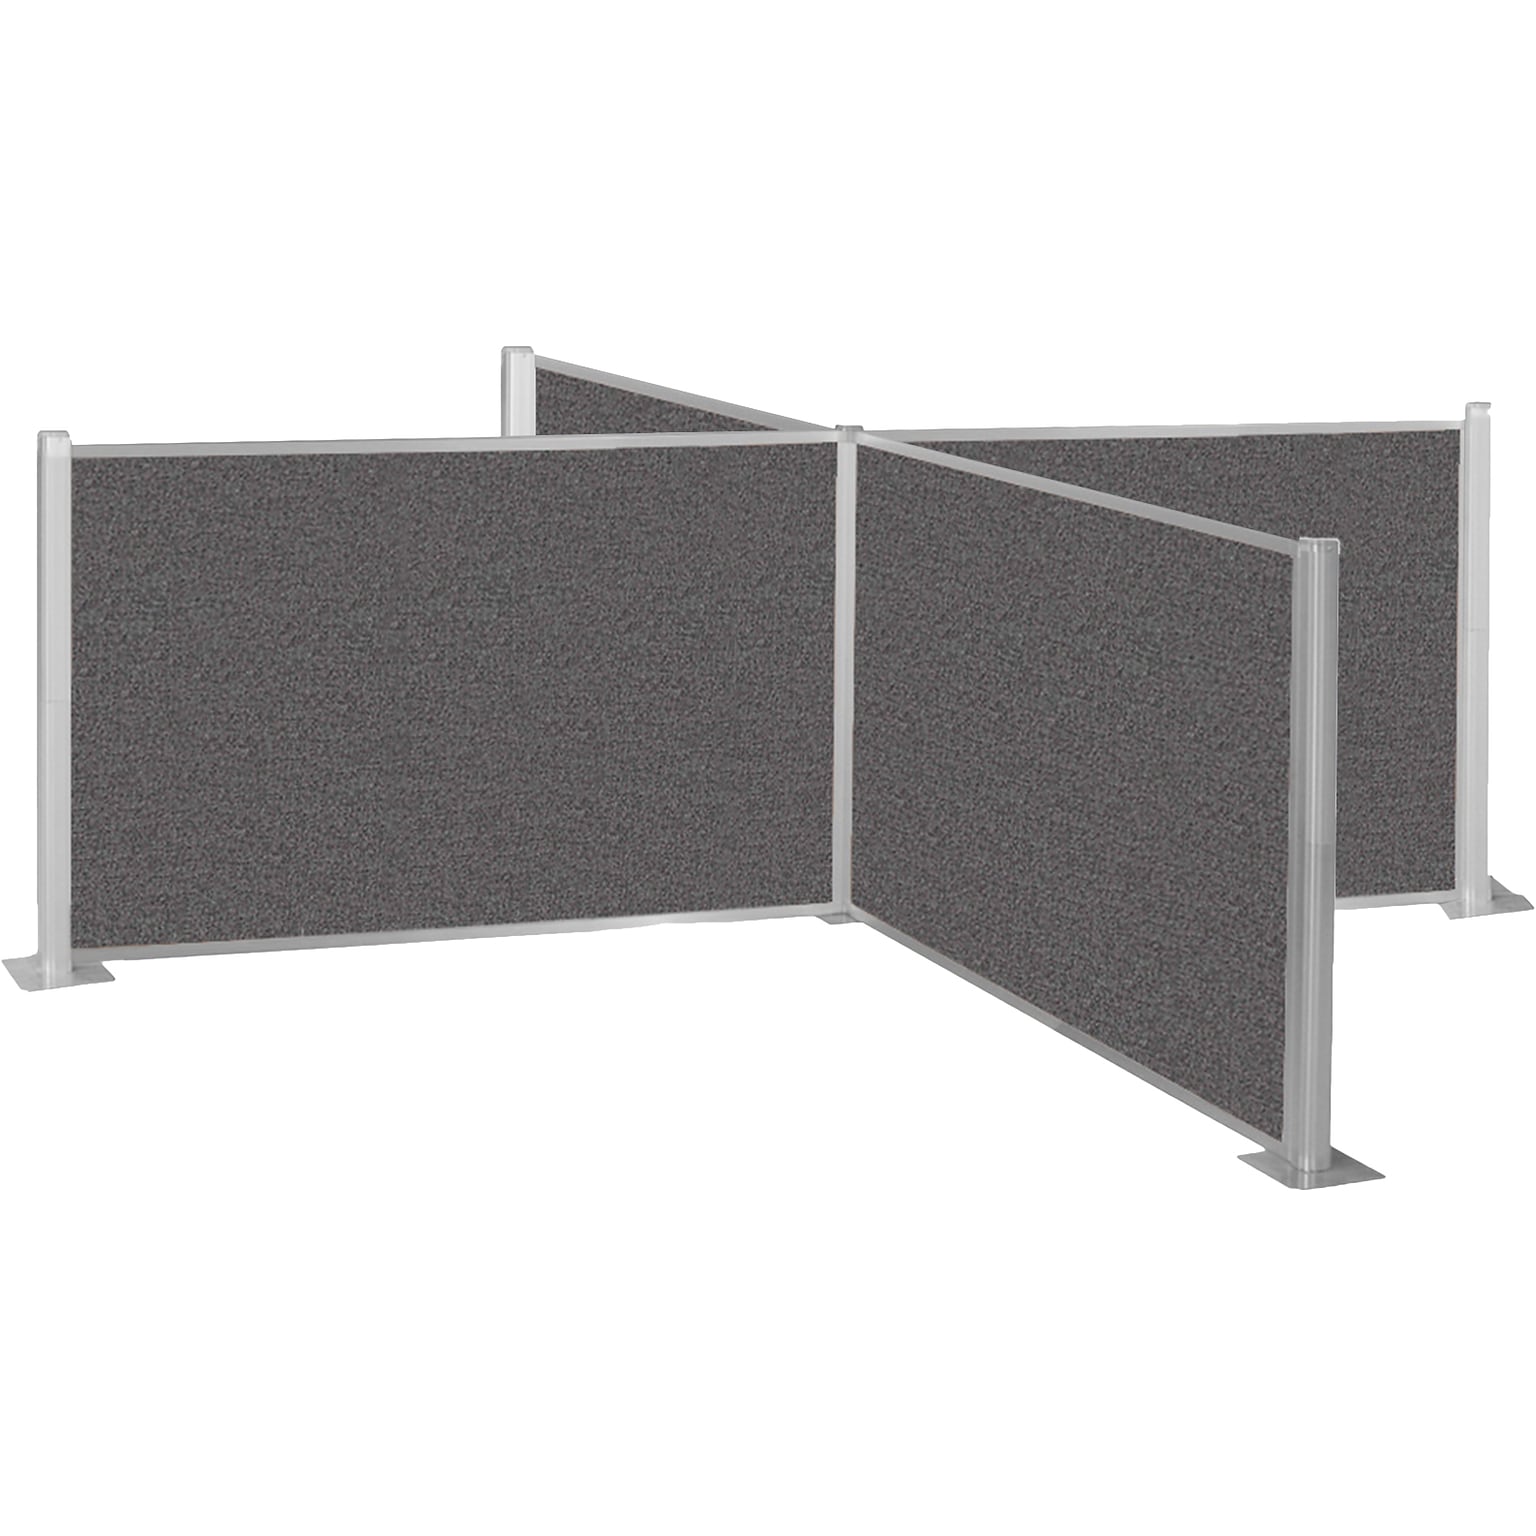 Versare Freestanding Hush Cubicle Kit, 4H x 12W, Charcoal Gray Fabric (1851601)